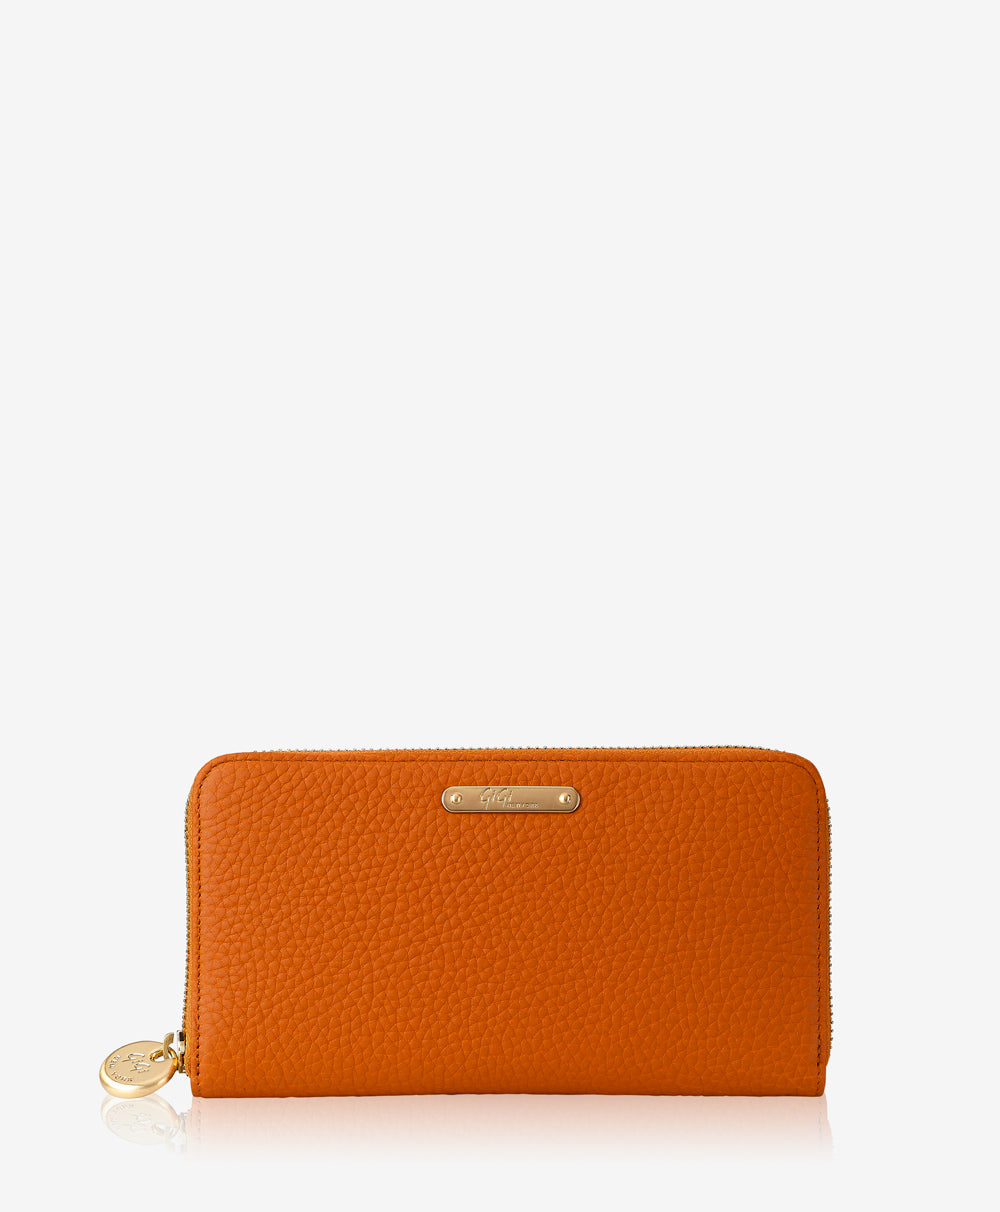 GiGi New York Large Zip Around Wallet Orange Pebble Grain Leather